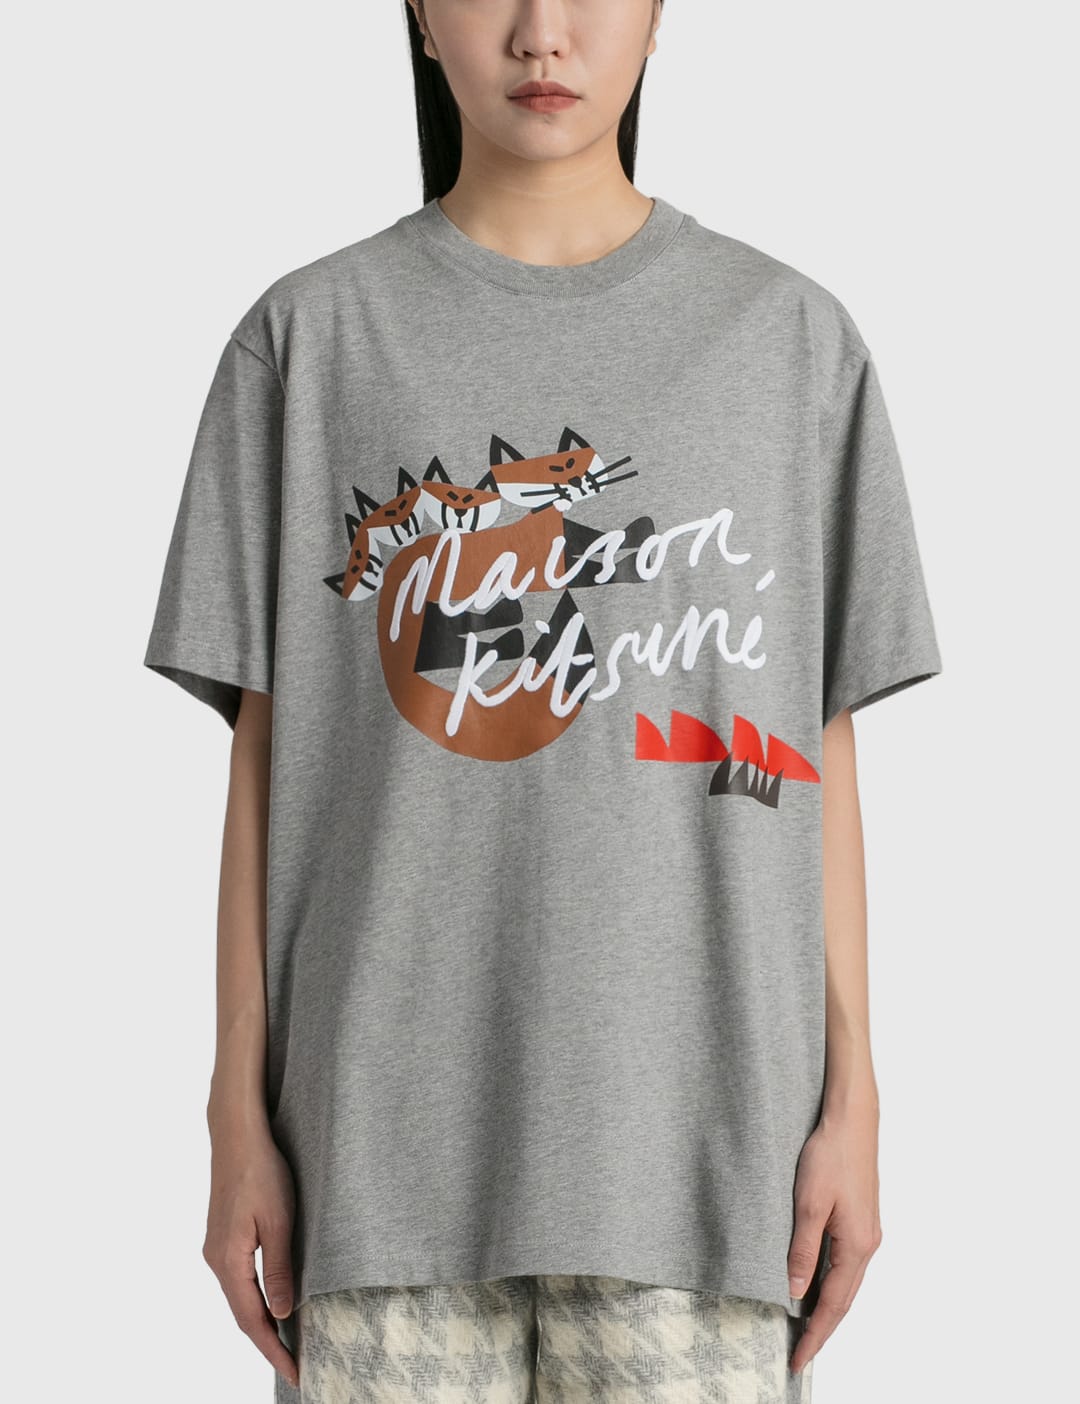 Maison Kitsune Bill Rebholz Handwriting Easy T-Shirt